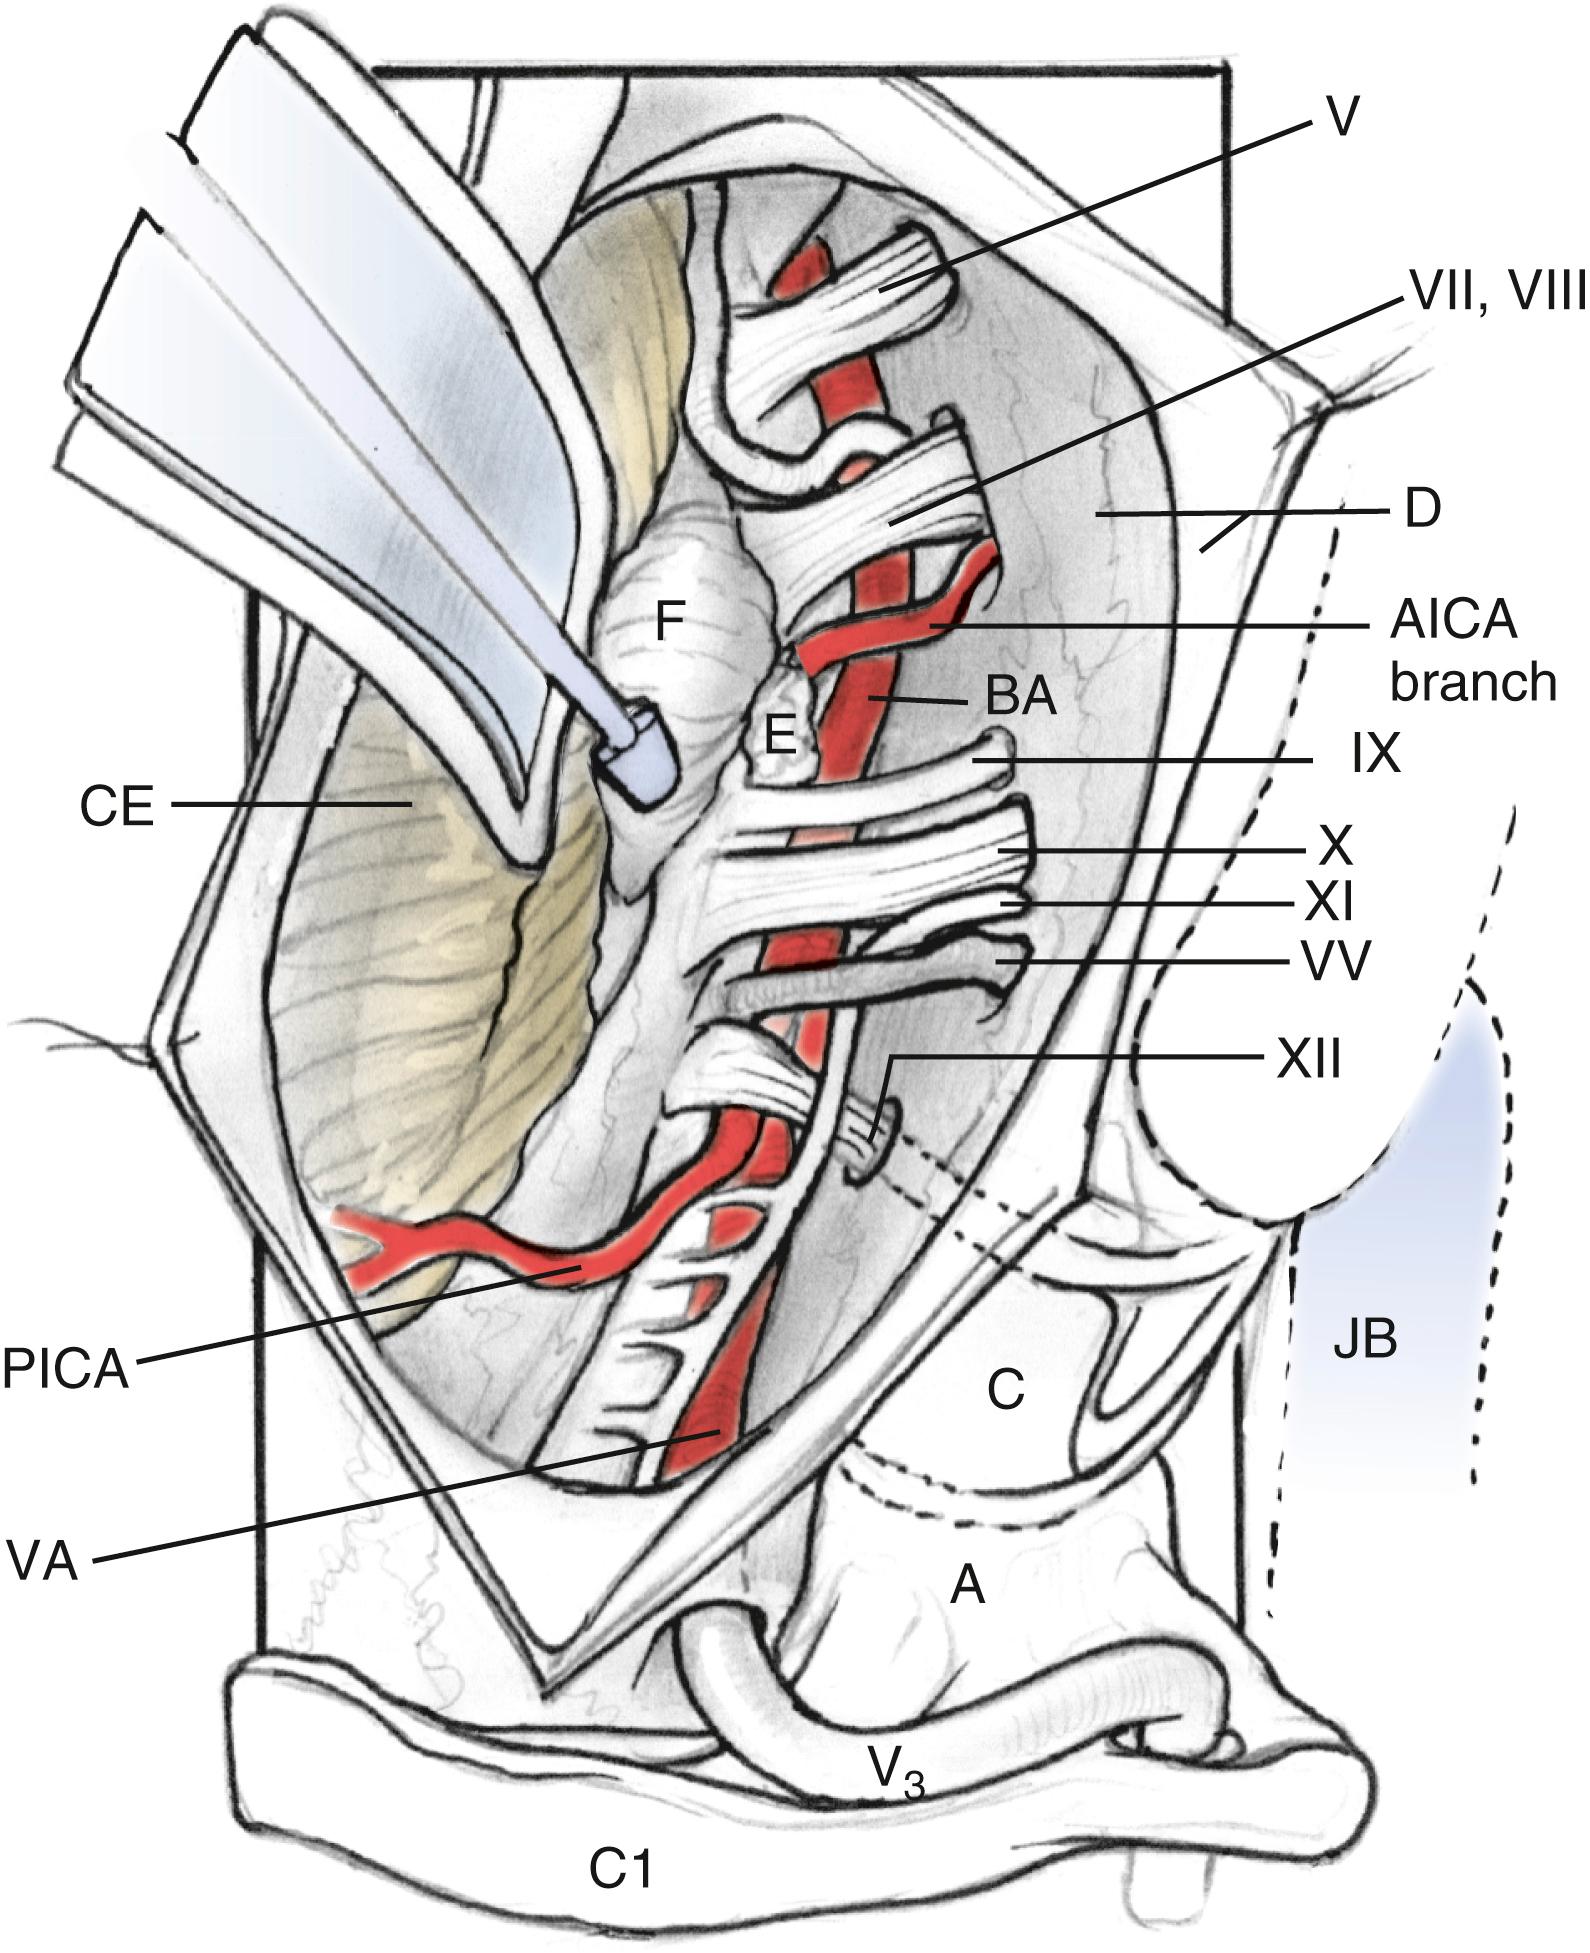 Fig. 54.8, Extreme lateral infrajugular transcondylar exposure, including high cervical dissection. A, Atlas C1 superior articular facet; B, brainstem; C, occipital condyle; D, dura; E, choroid plexus; F, flocculus. AICA, Anterior inferior cerebellar artery; BA, basilar artery; CE, cerebellum; JB, jugular bulb; PICA, posterior inferior cerebellar artery; VA, vertebral artery; VV, vagal vein.